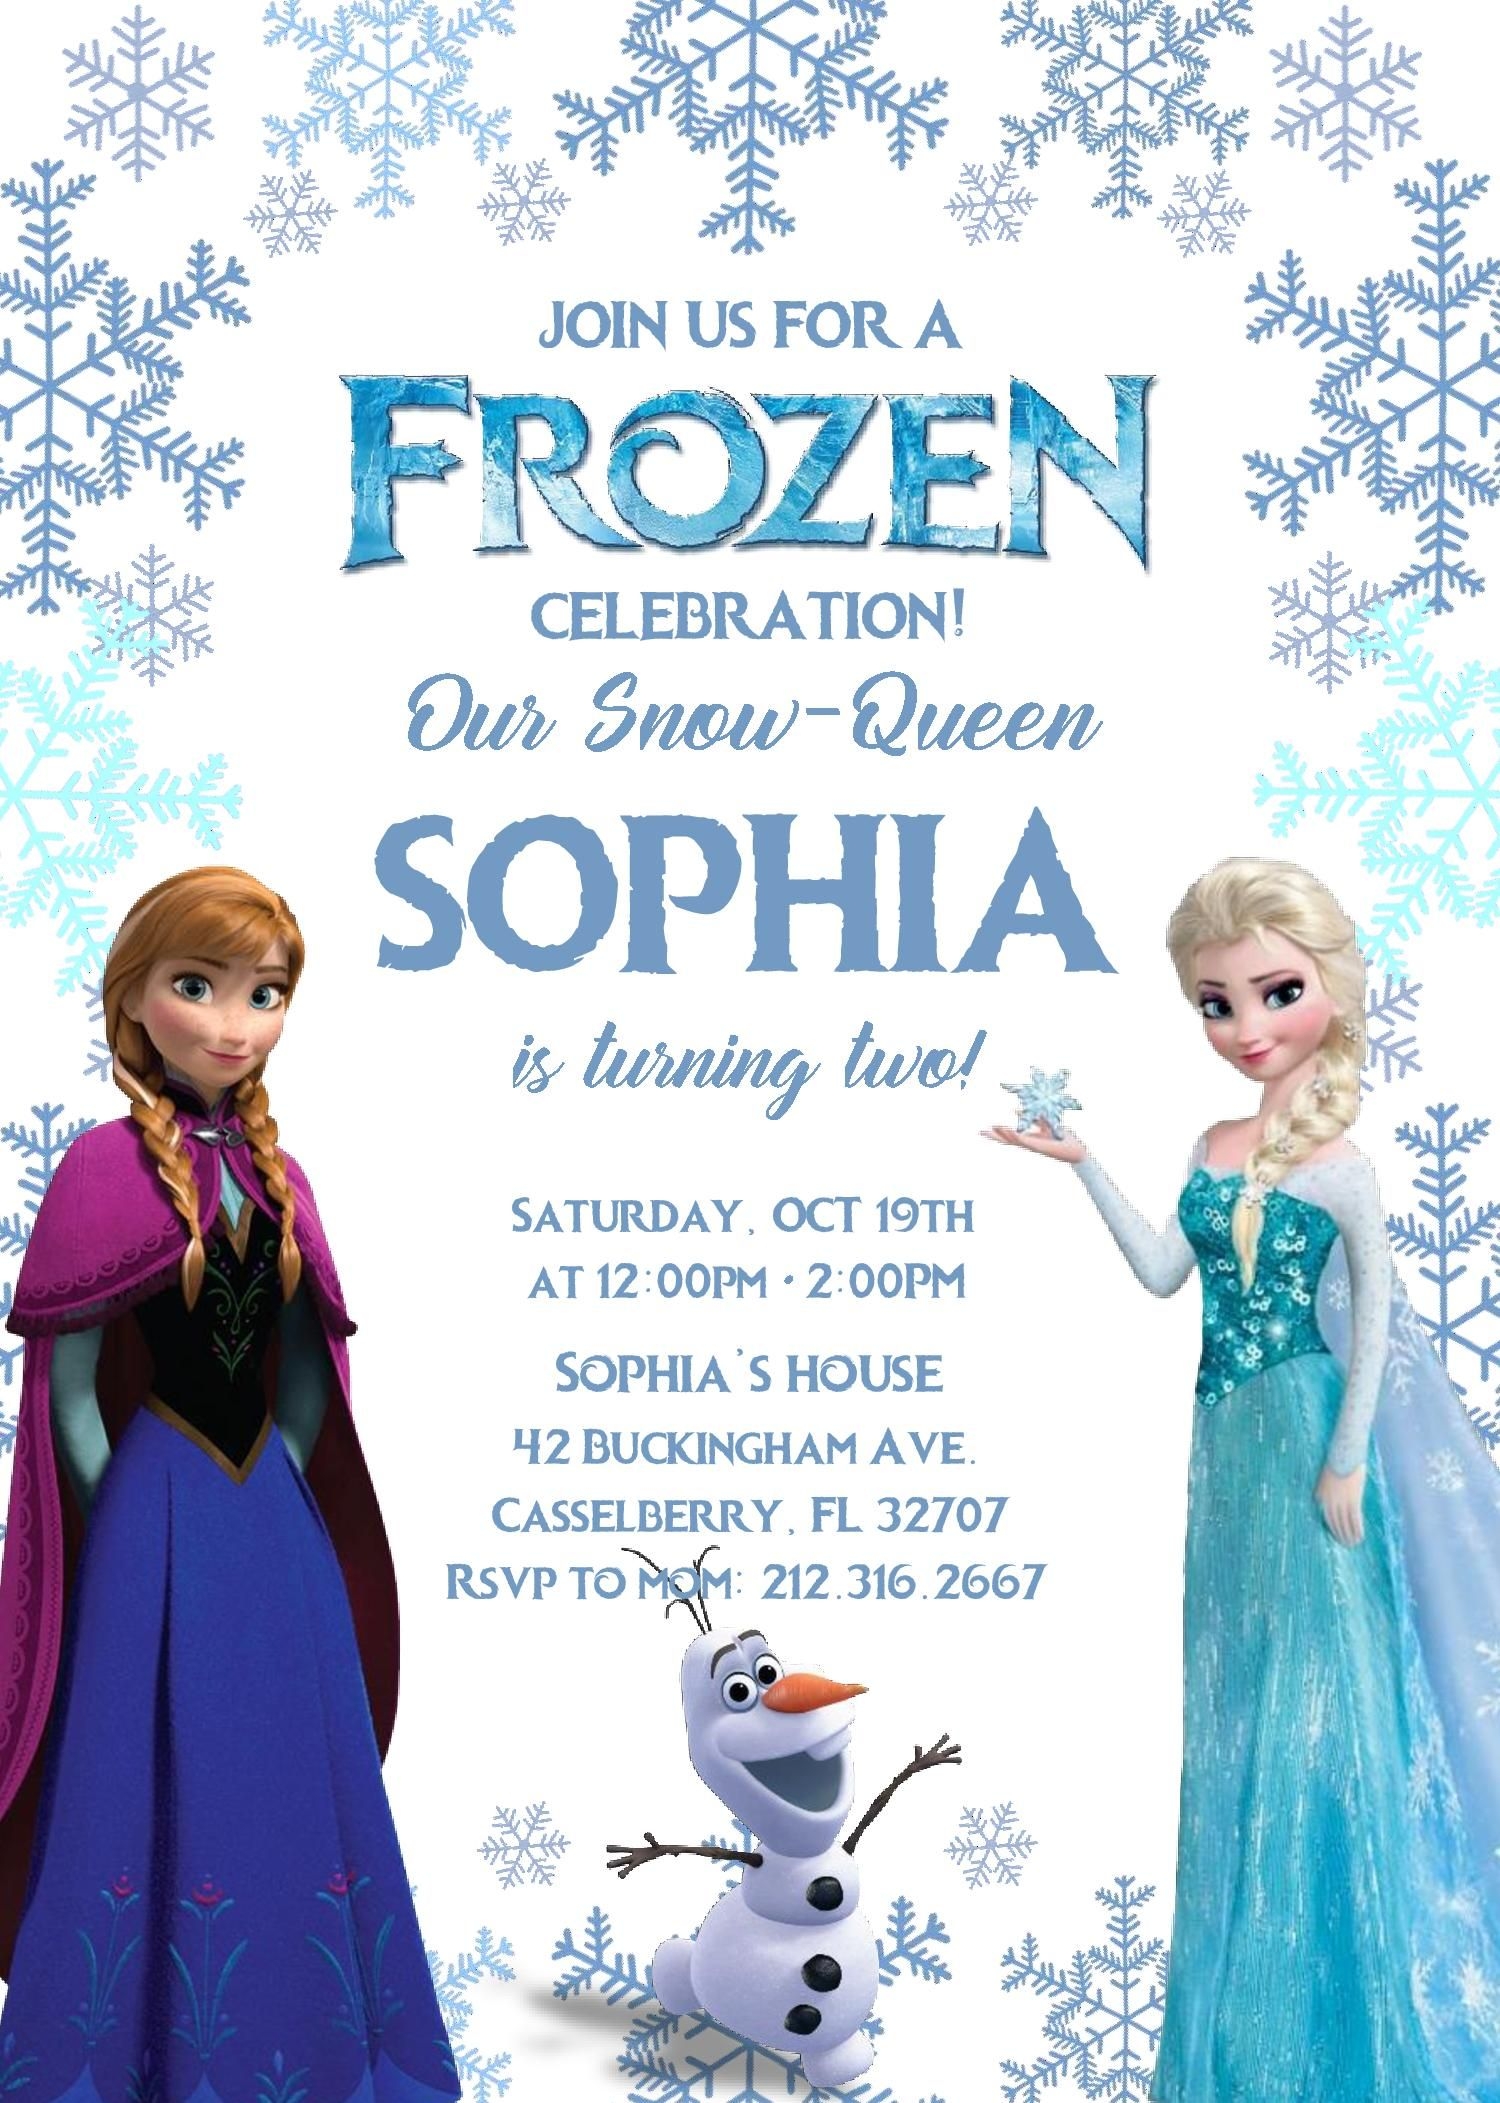 Free Printable Frozen Birthday Invitations - Free Printable Frozen Birthday Invitations